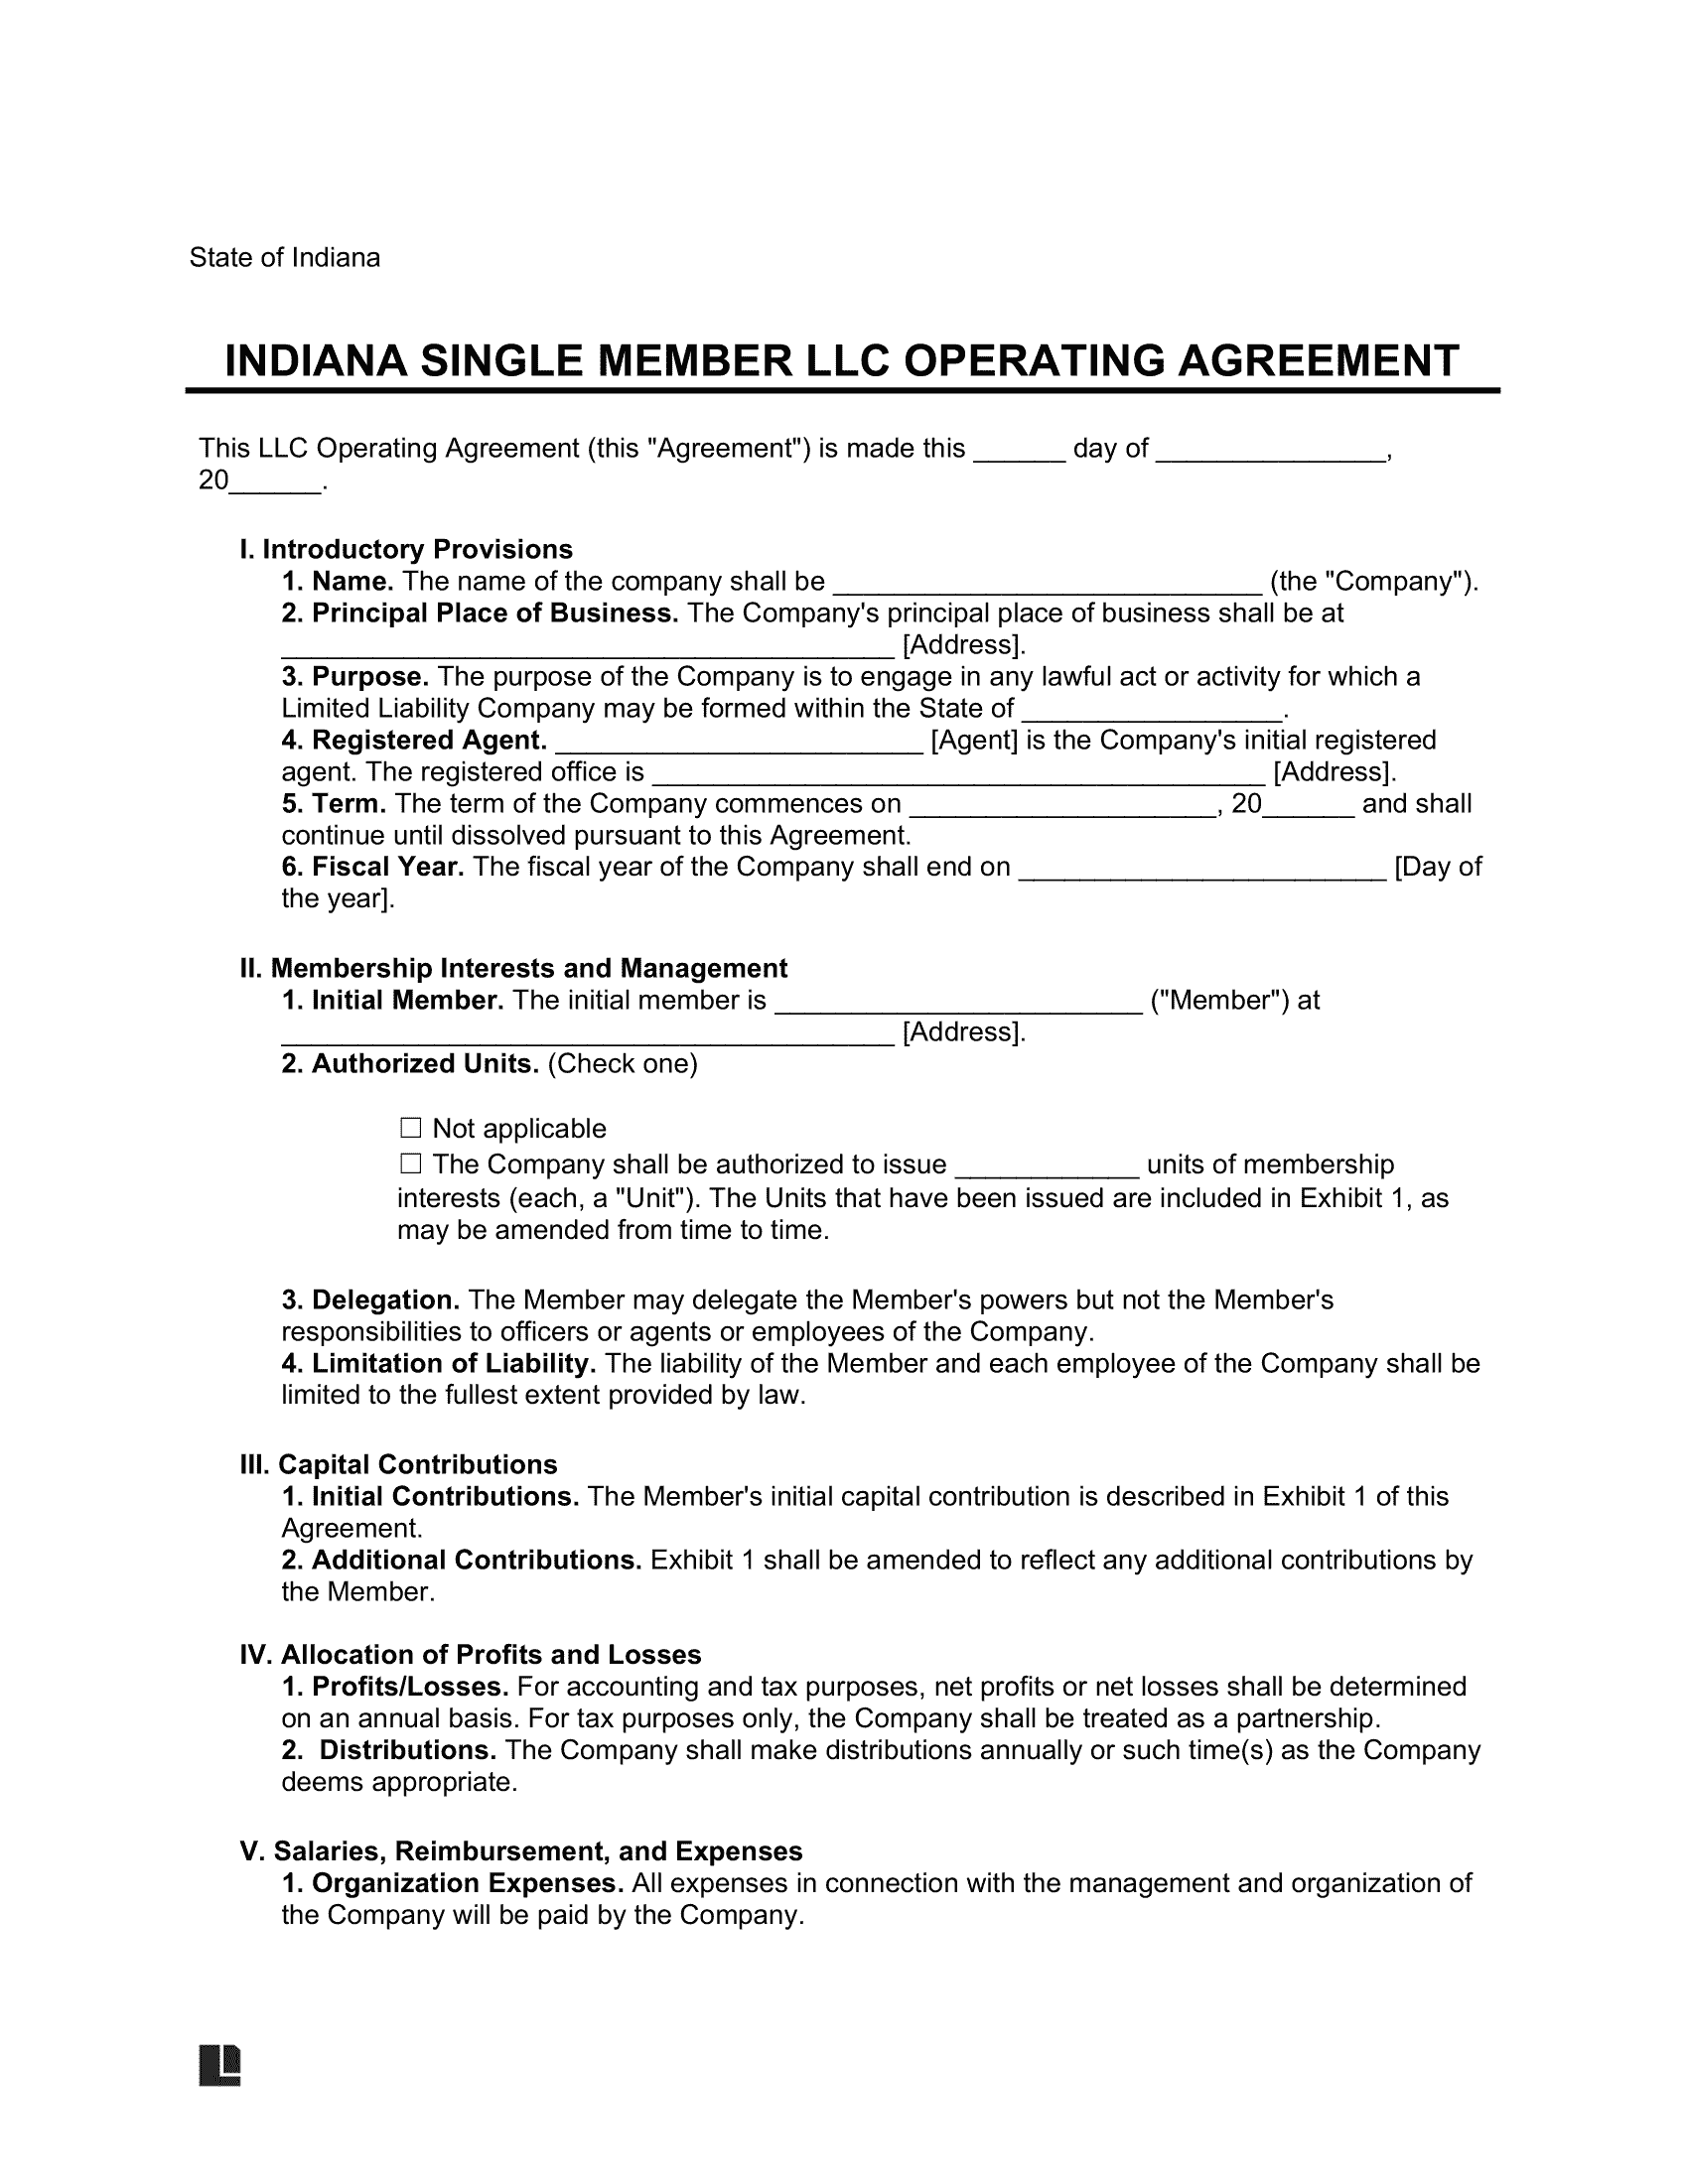 Indiana Single Member LLC Operating Agreement Form